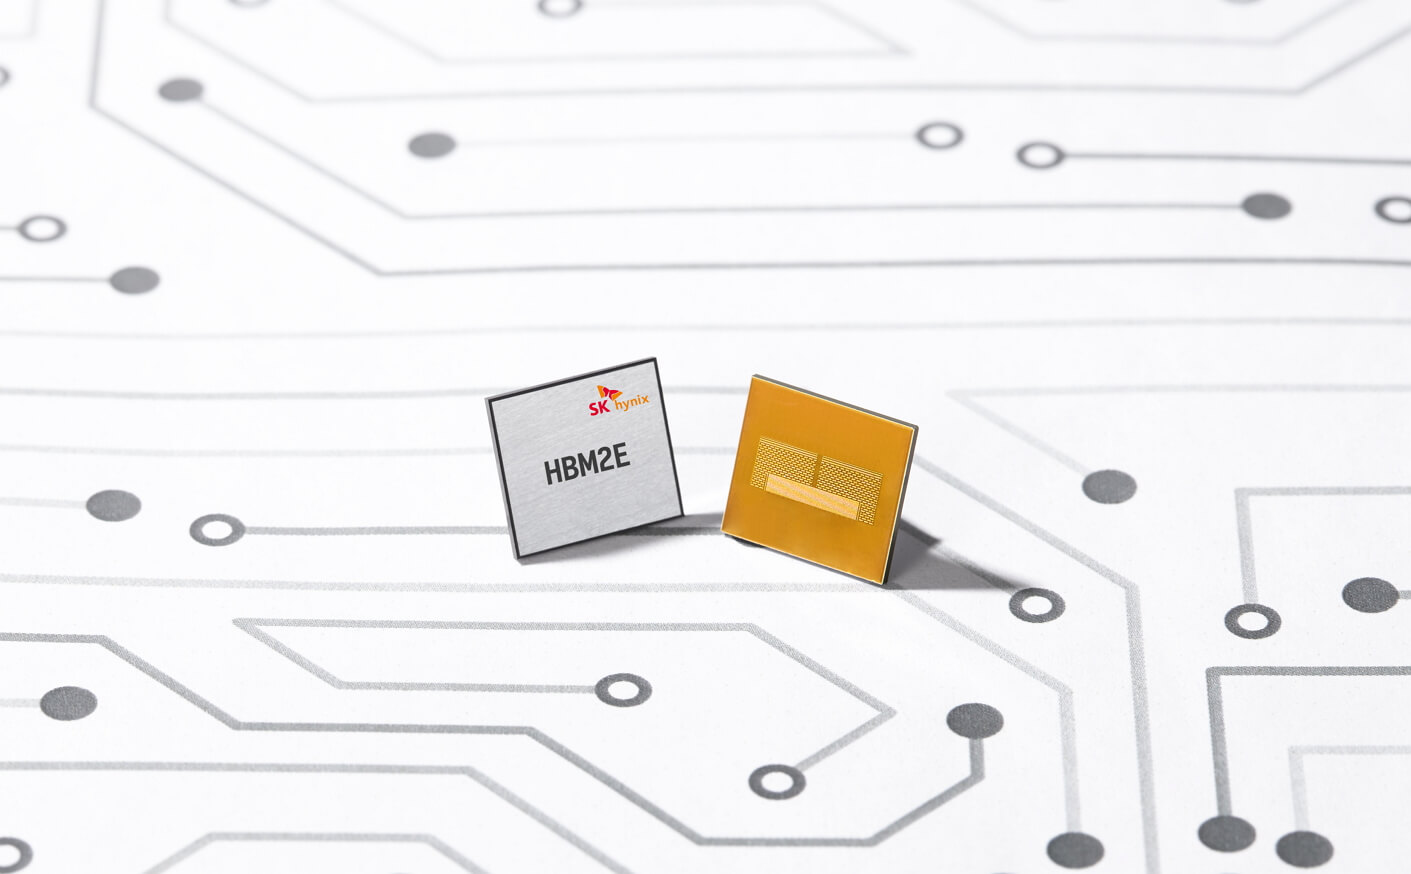 SK Hynix develops the world's fastest high-bandwidth DRAM based on HBM2E